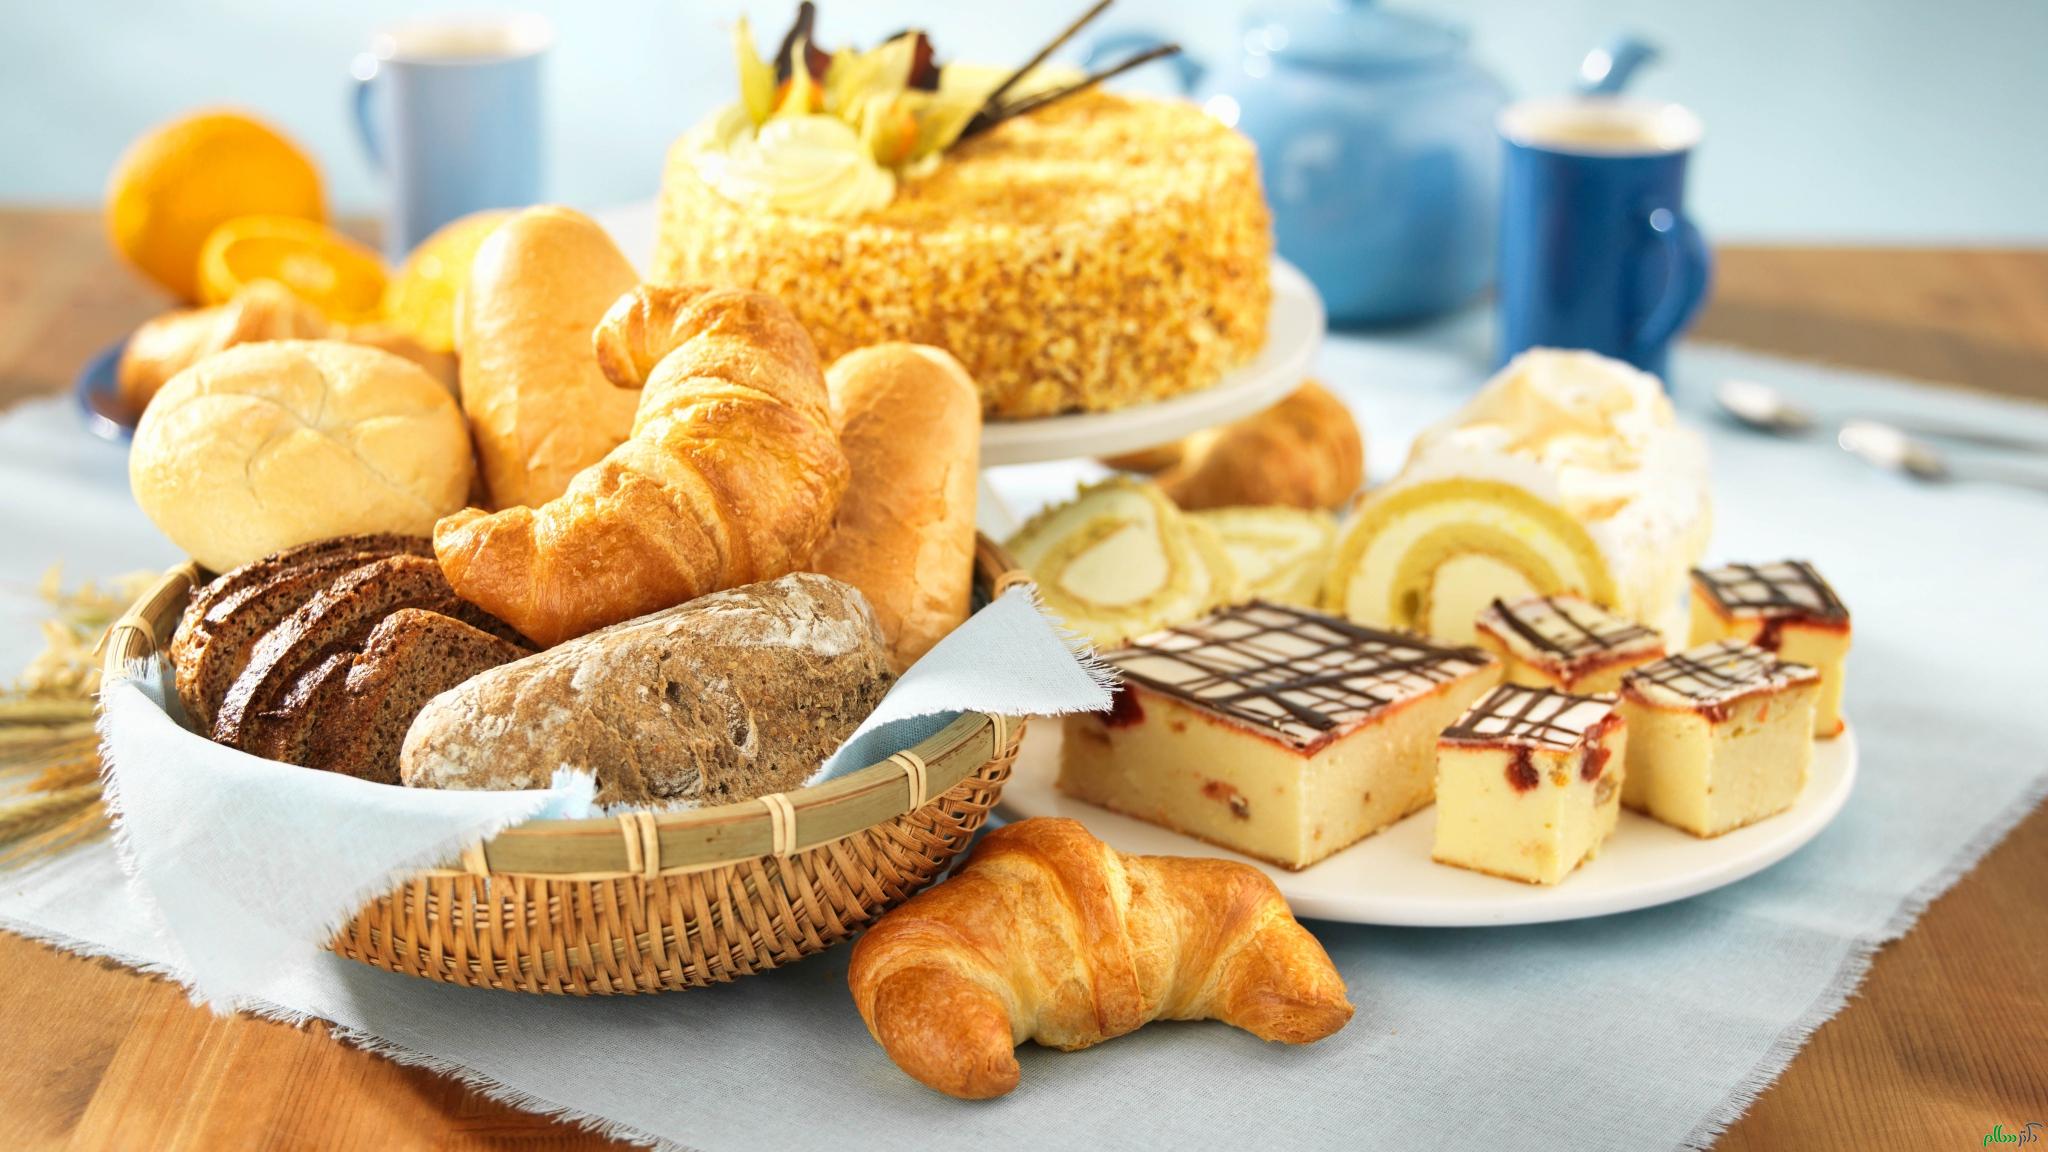 pastries_cakes_croissants_table